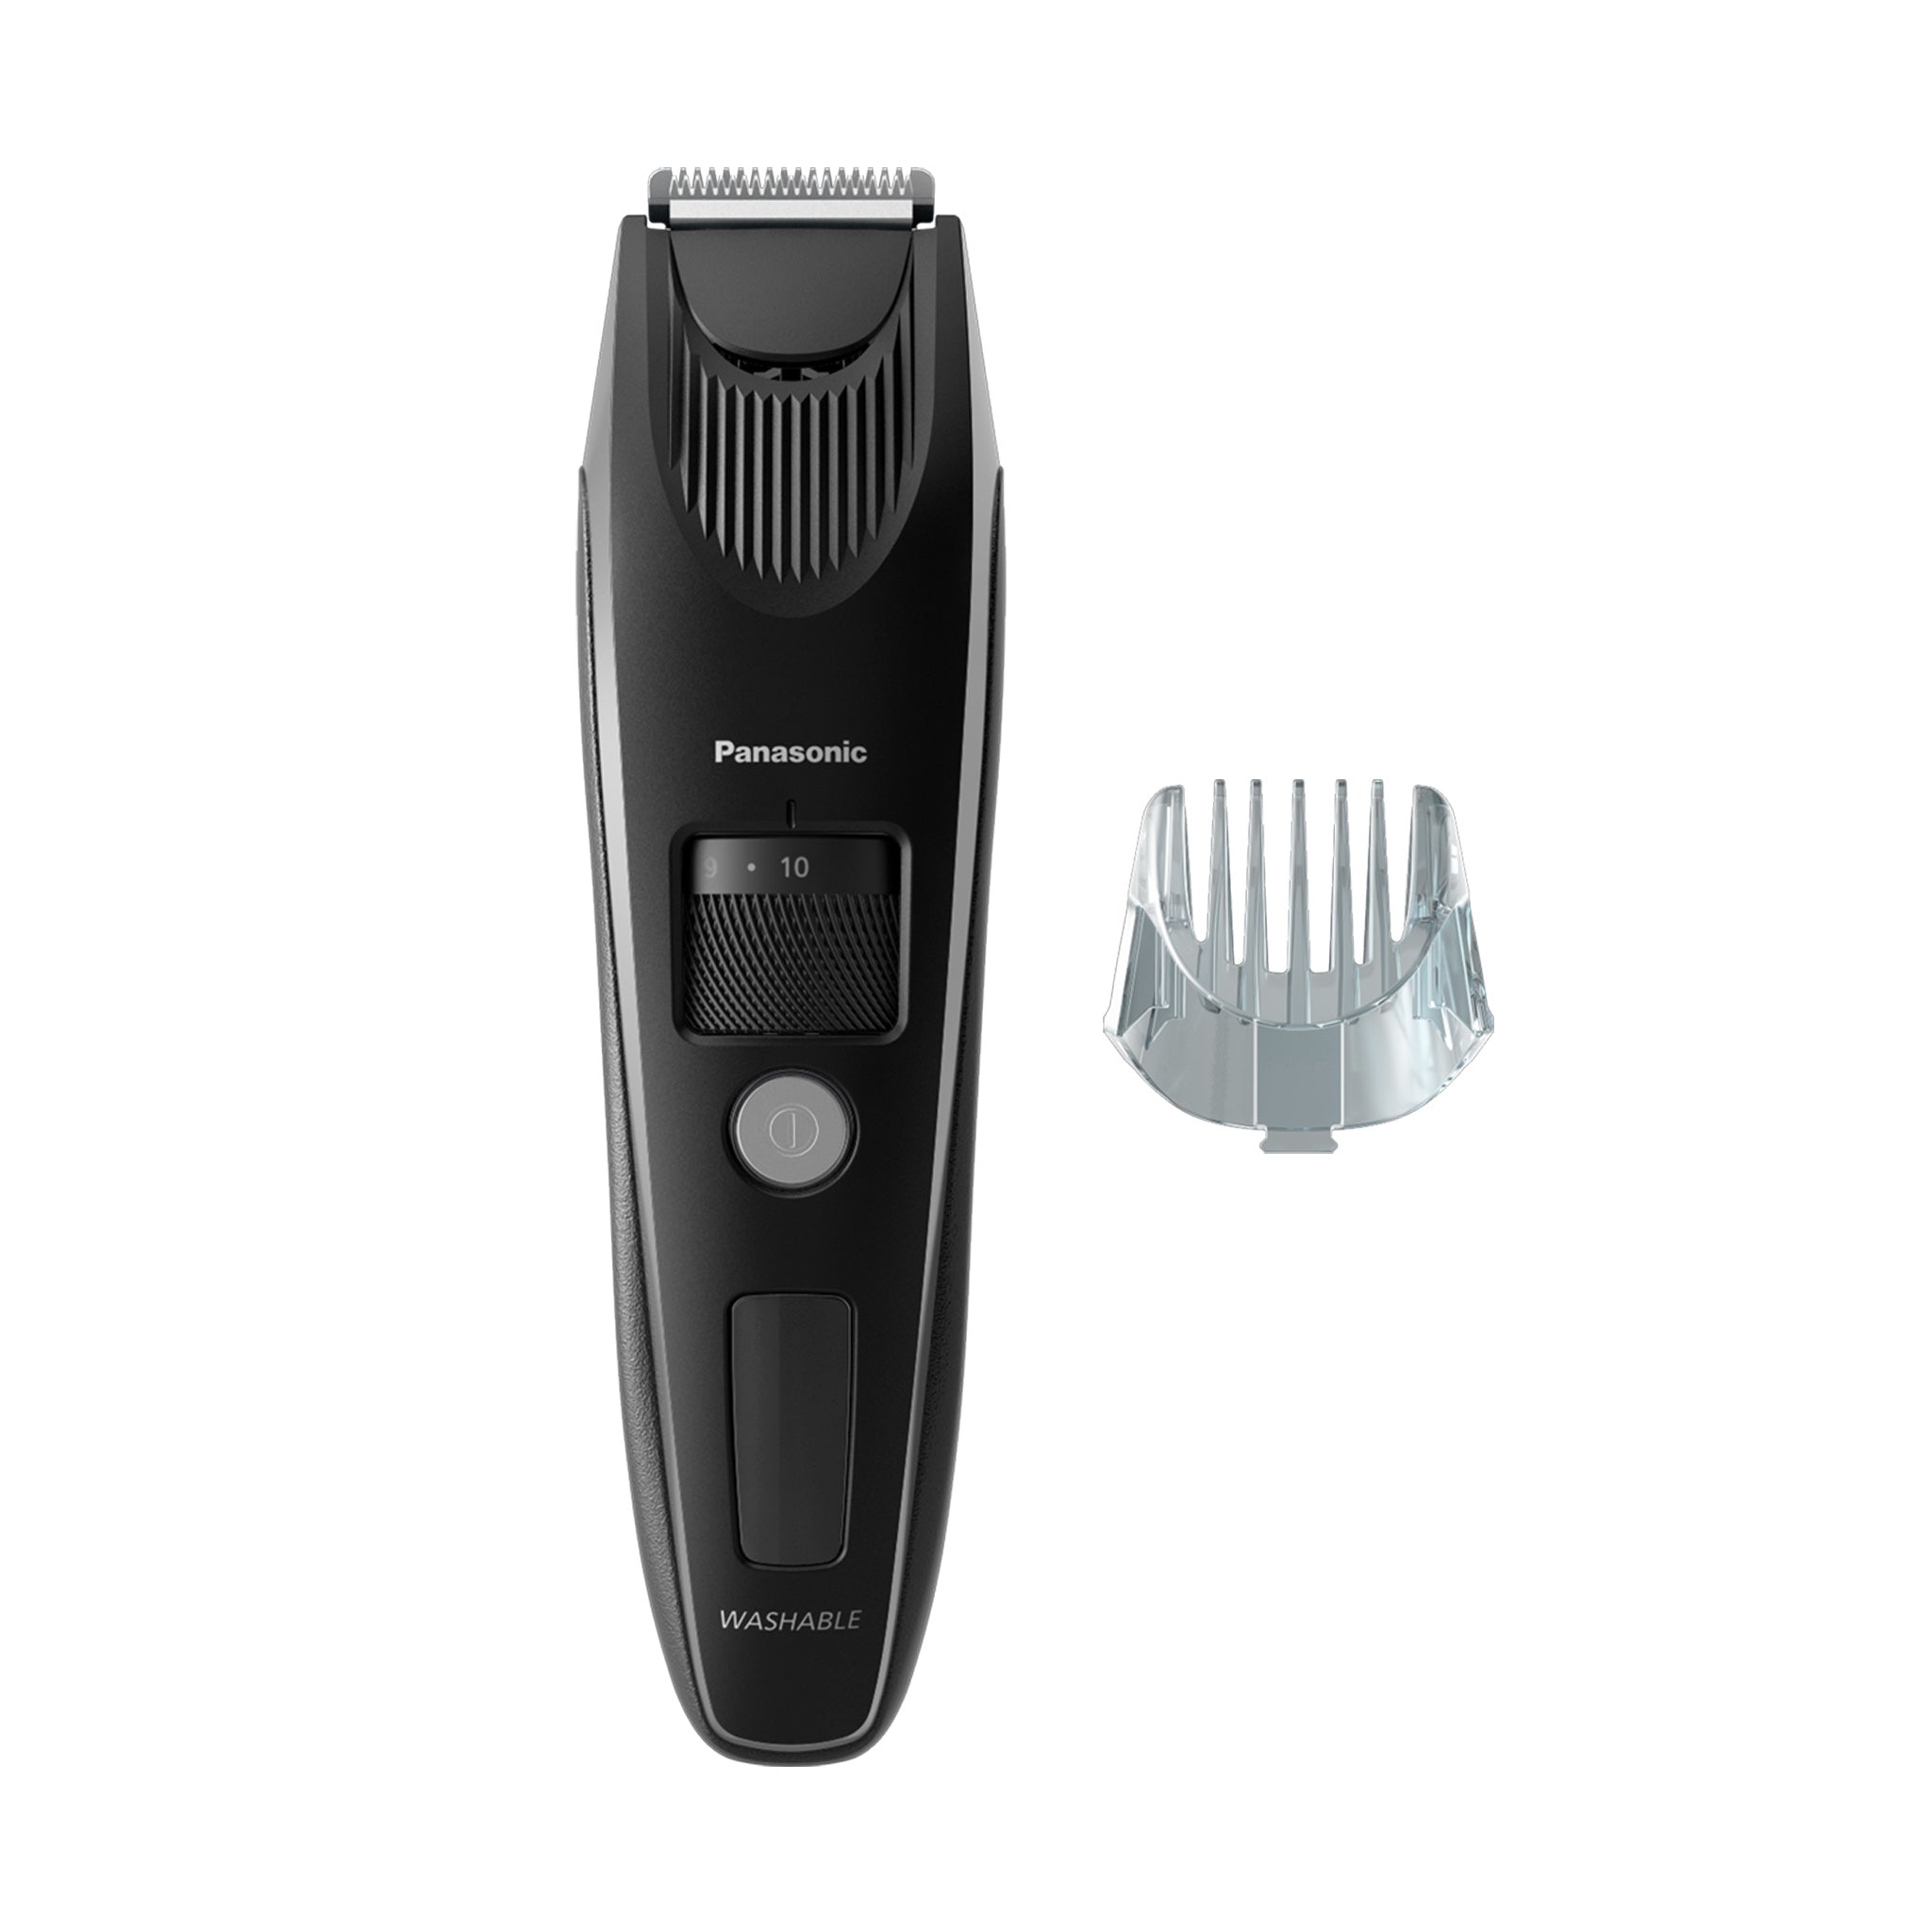 Trimmer Length and ER-SB40-K Panasonic Power Hair with Adjustable 19 Precision Settings - Beard